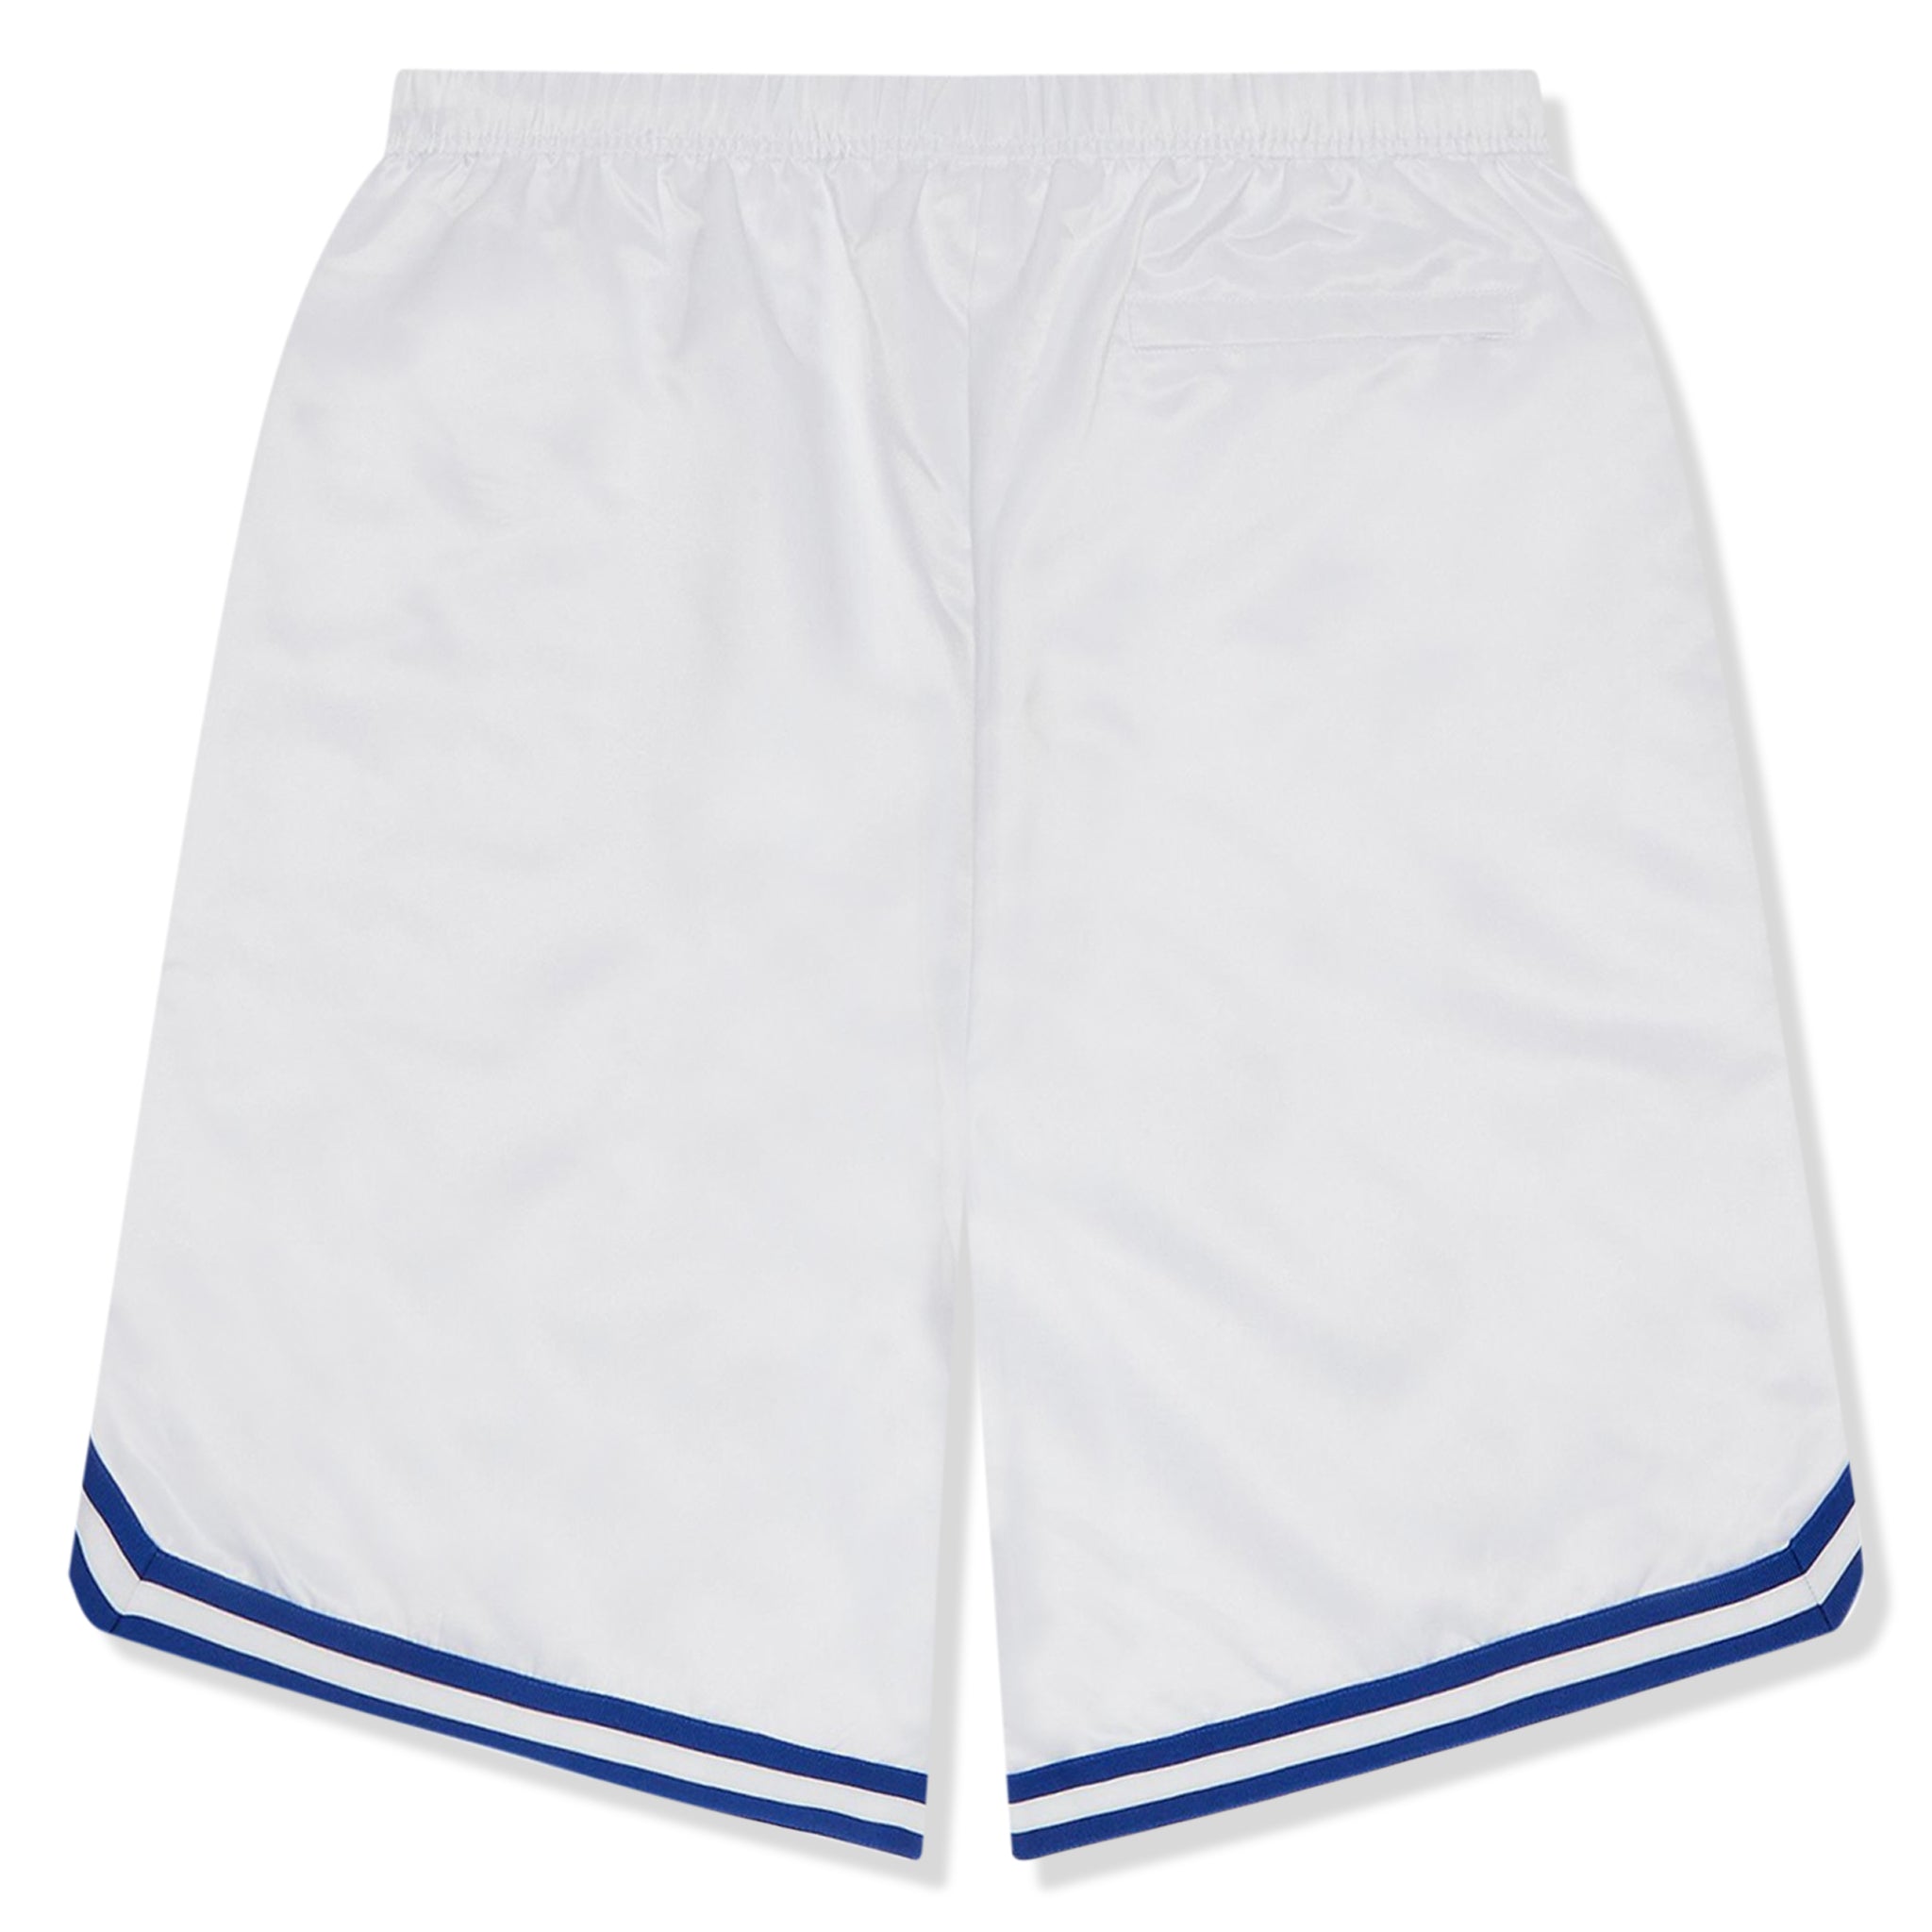 Image of Supreme Mitchell & Ness Satin White Basketball Shorts